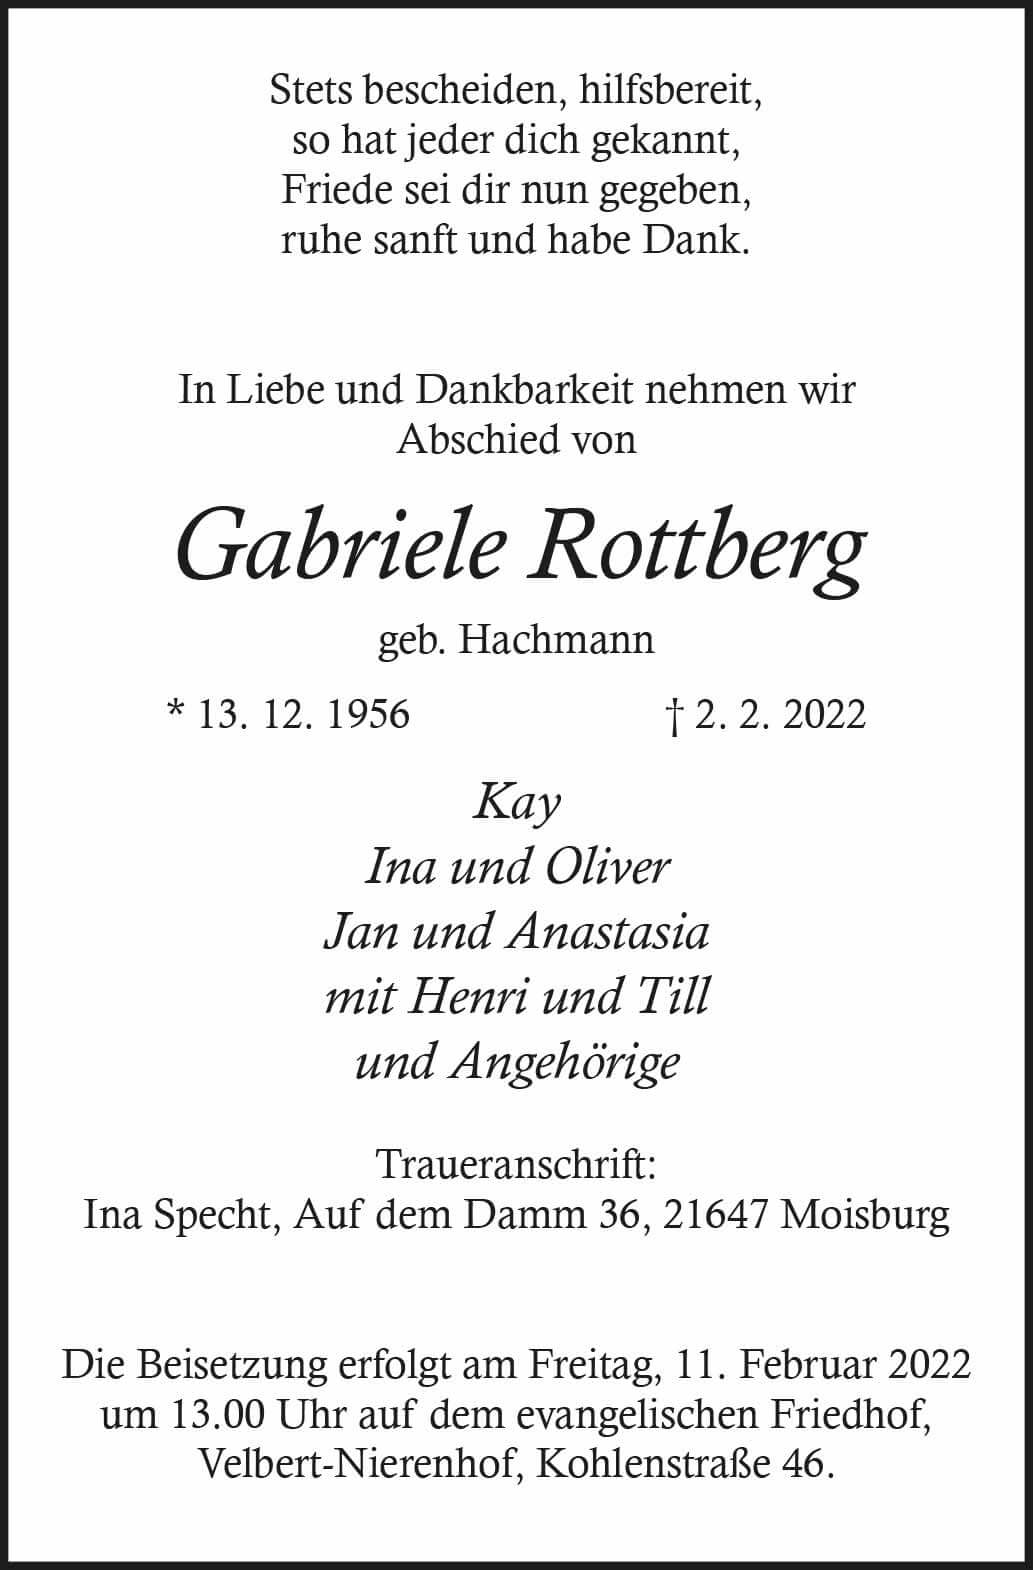 Gabriele Rottberg † 2. 2. 2022